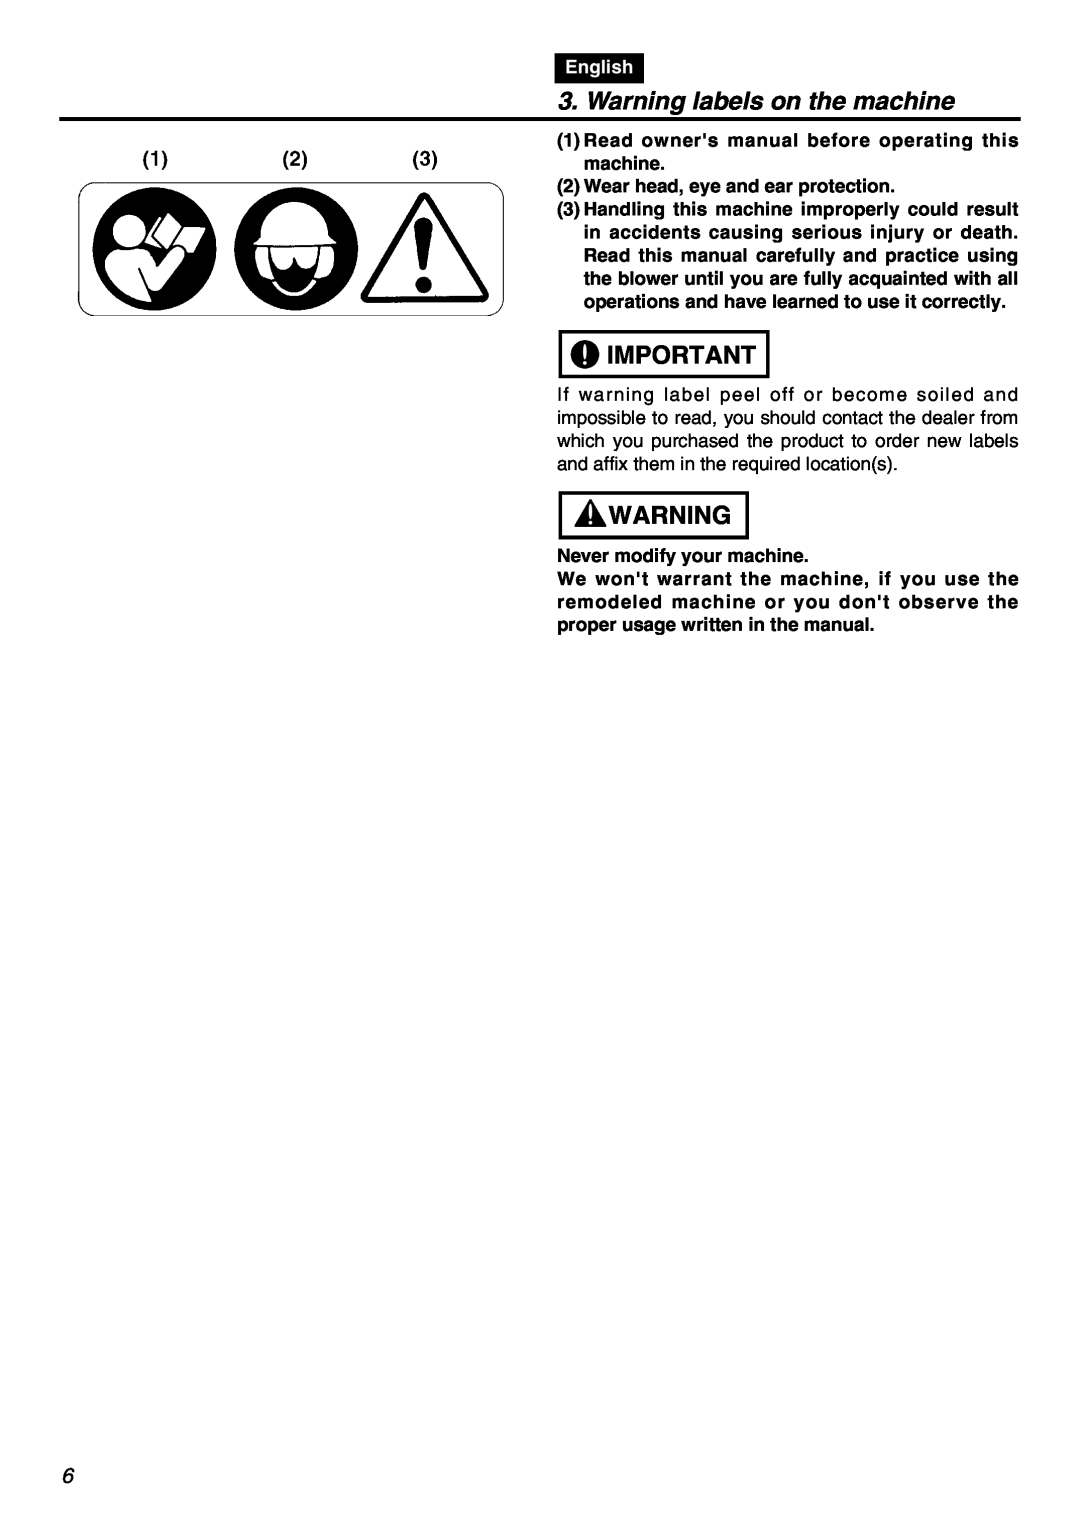 RedMax EBZ7001RH-CA, EBZ7001-CA manual Warning labels on the machine, English 